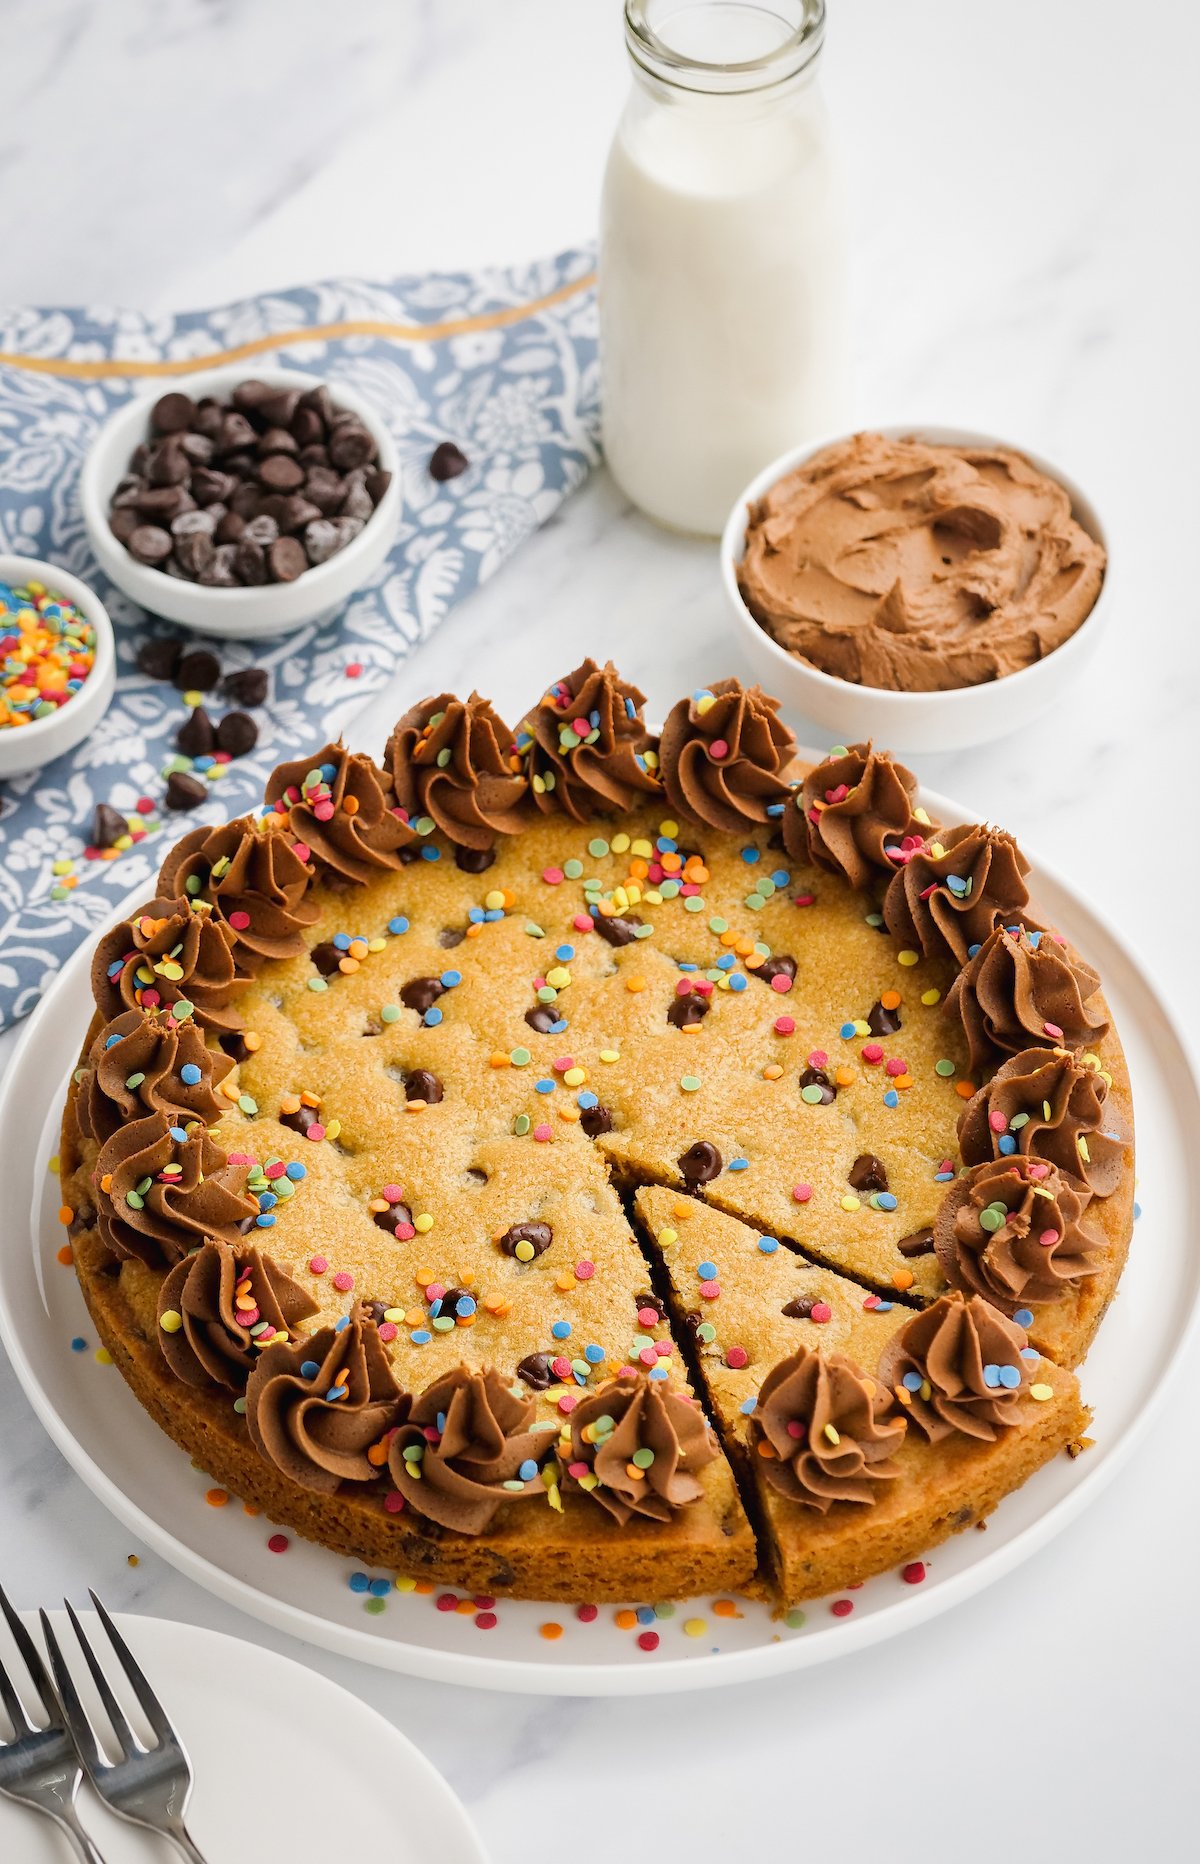 https://thenovicechefblog.com/wp-content/uploads/2021/09/Cookie-Cake-1.jpeg